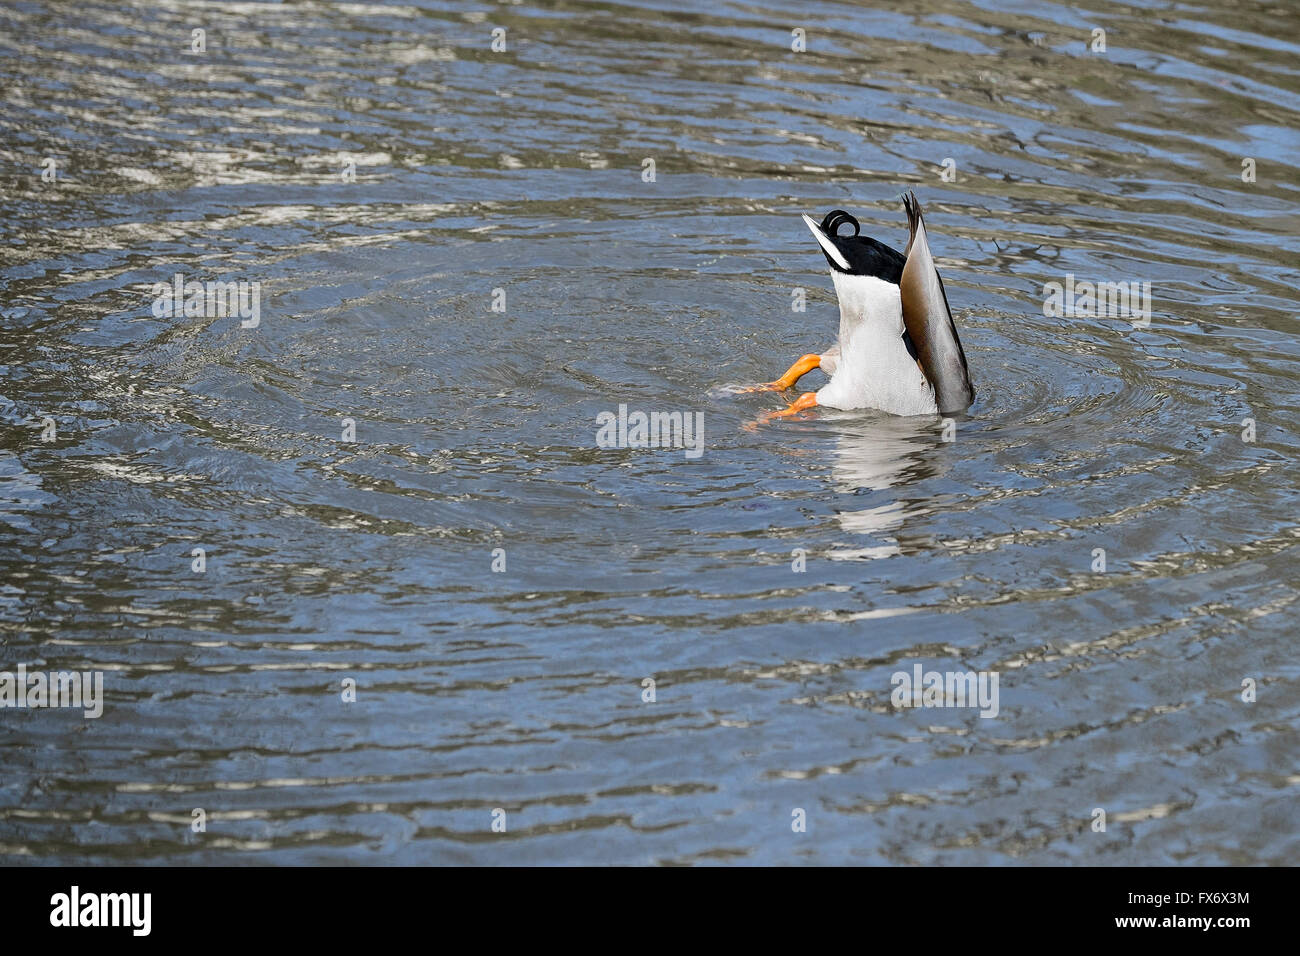 A Mallard Duck Anos platyrhynchos feeding underwater with its bottom in the air. Stock Photo